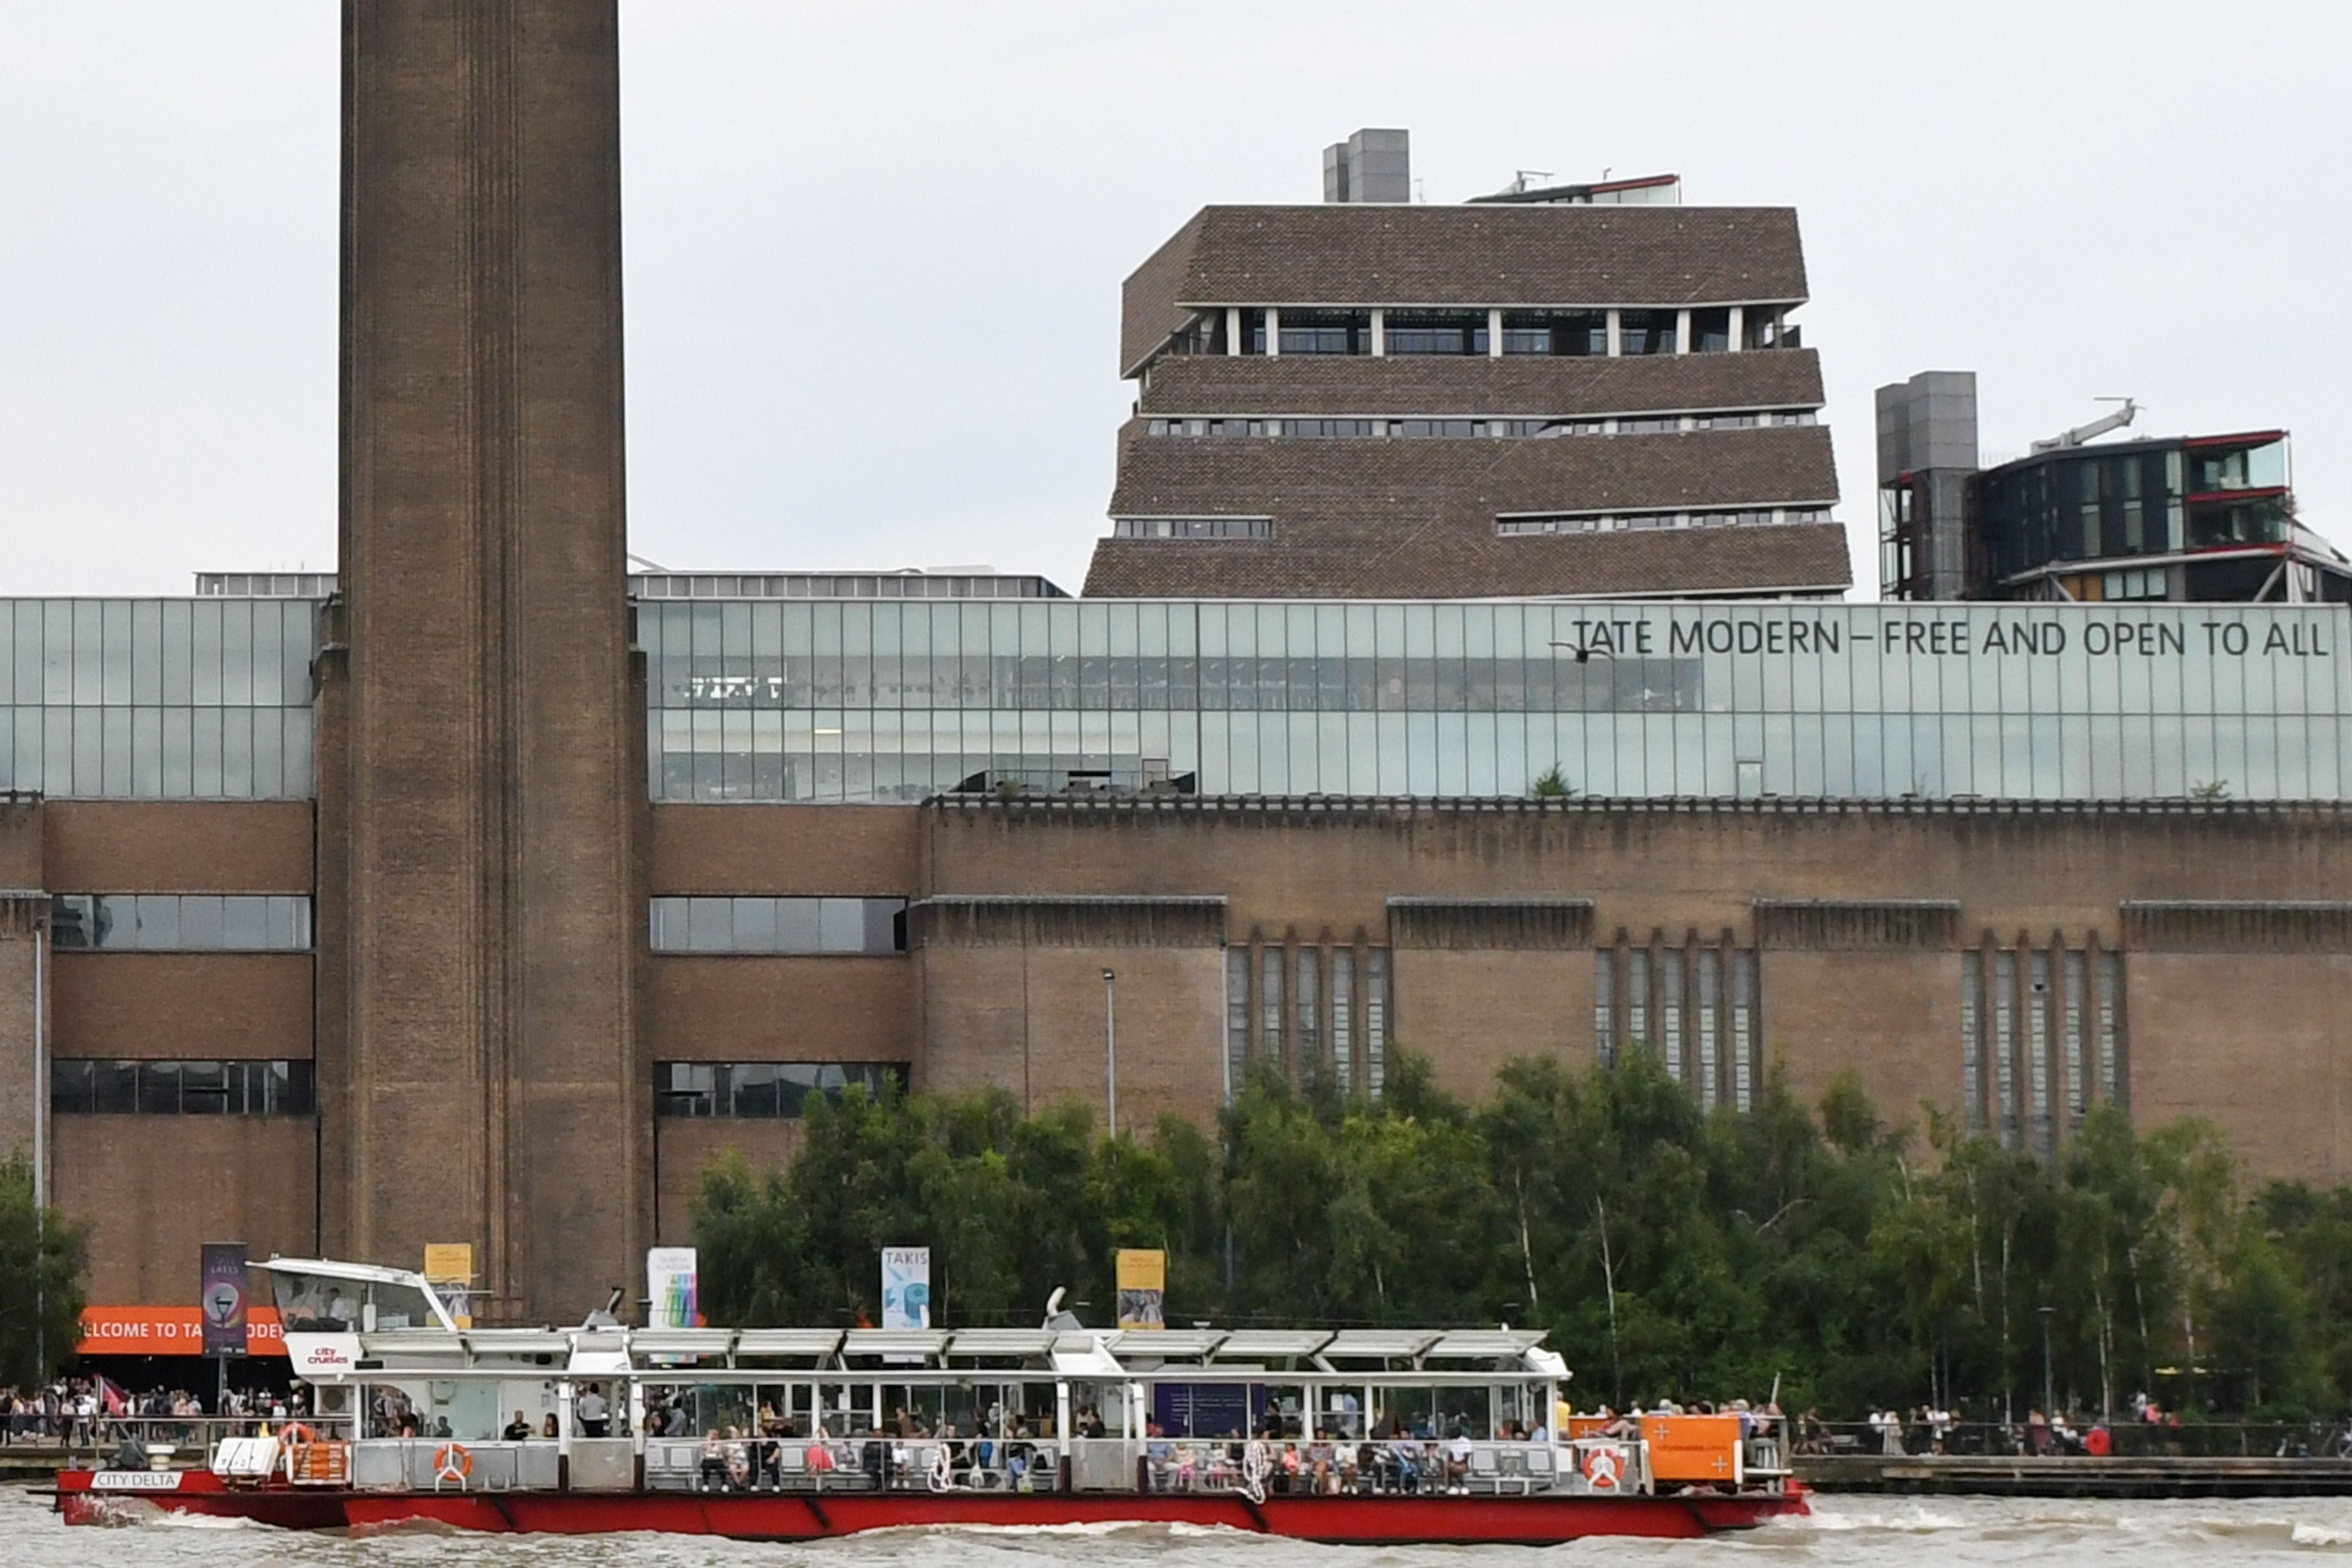 Jonty Bravery was found guilty of attempted murder after he threw a little boy off a Tate Modern balcony